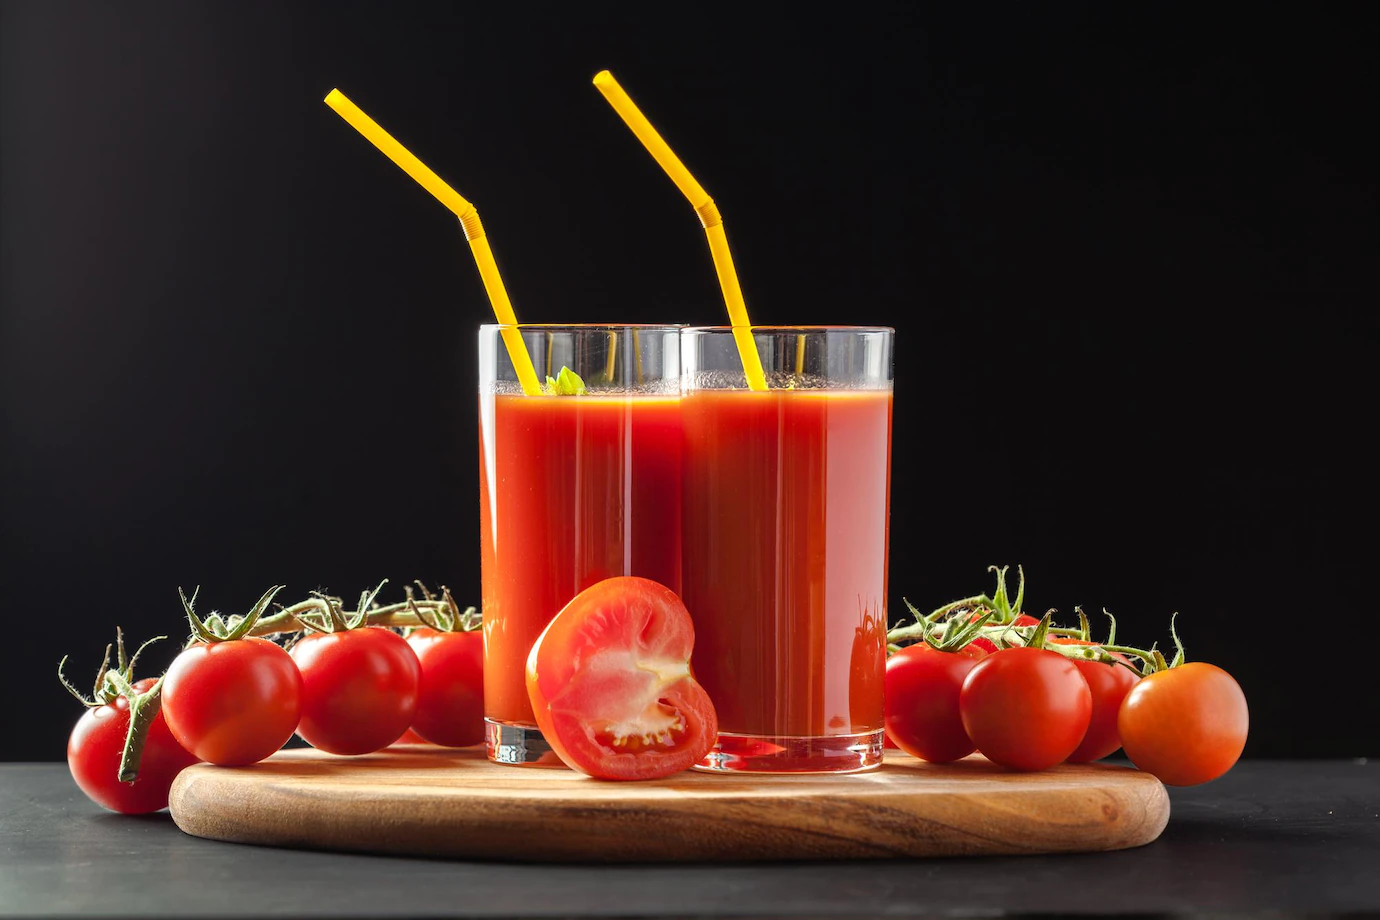 Tomato Juice With Tomatoes 93675 128913